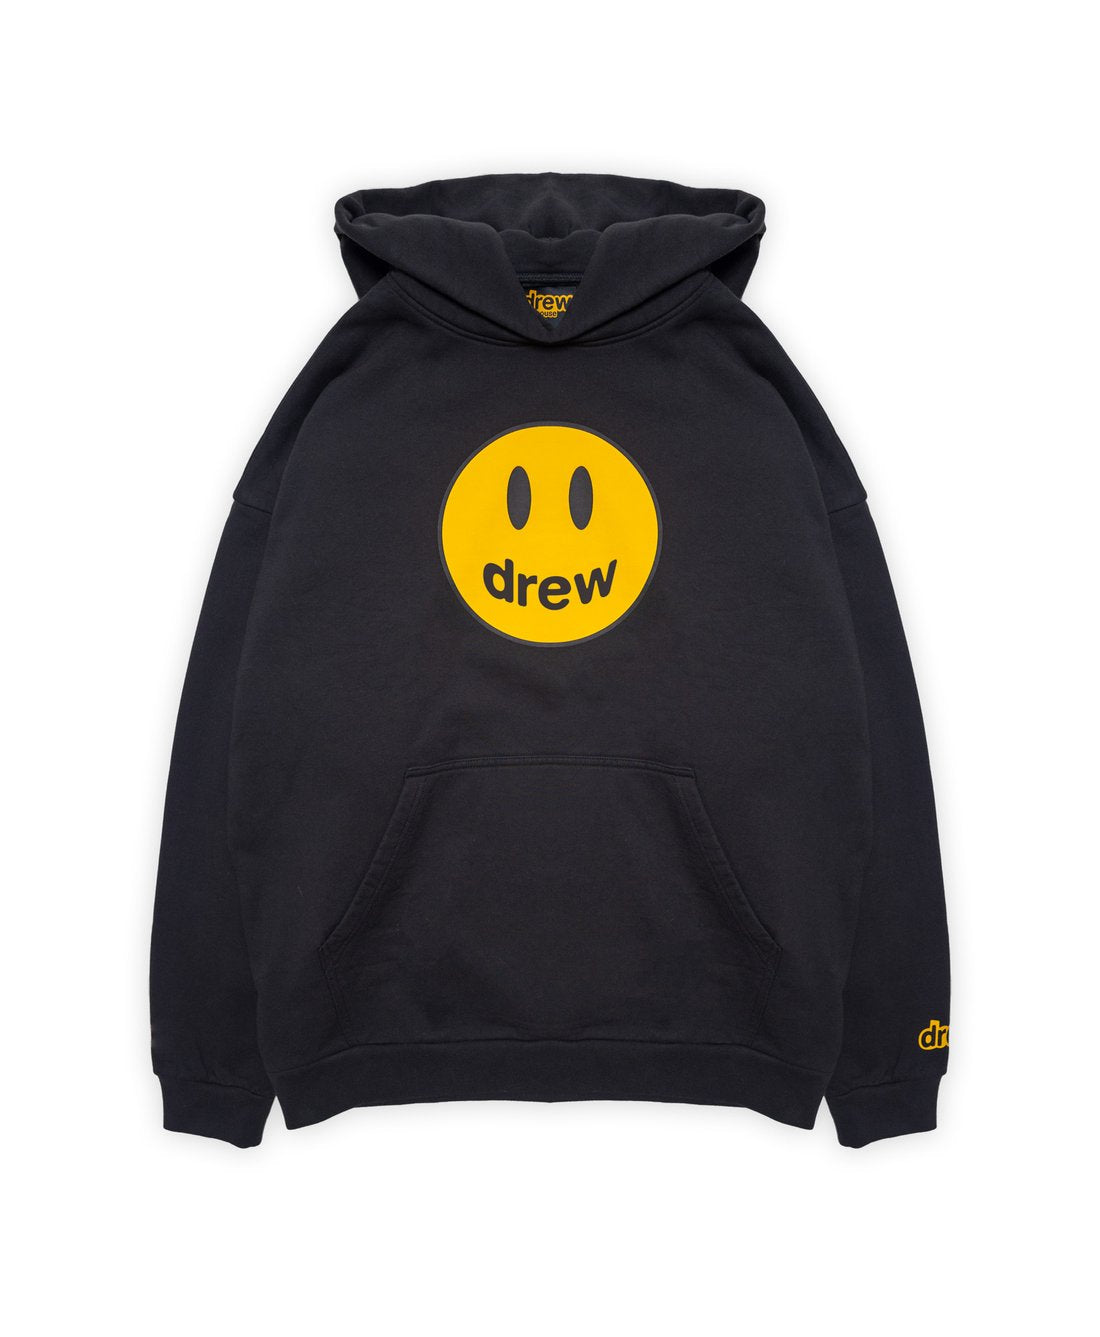 Drew House mascot hoodie black